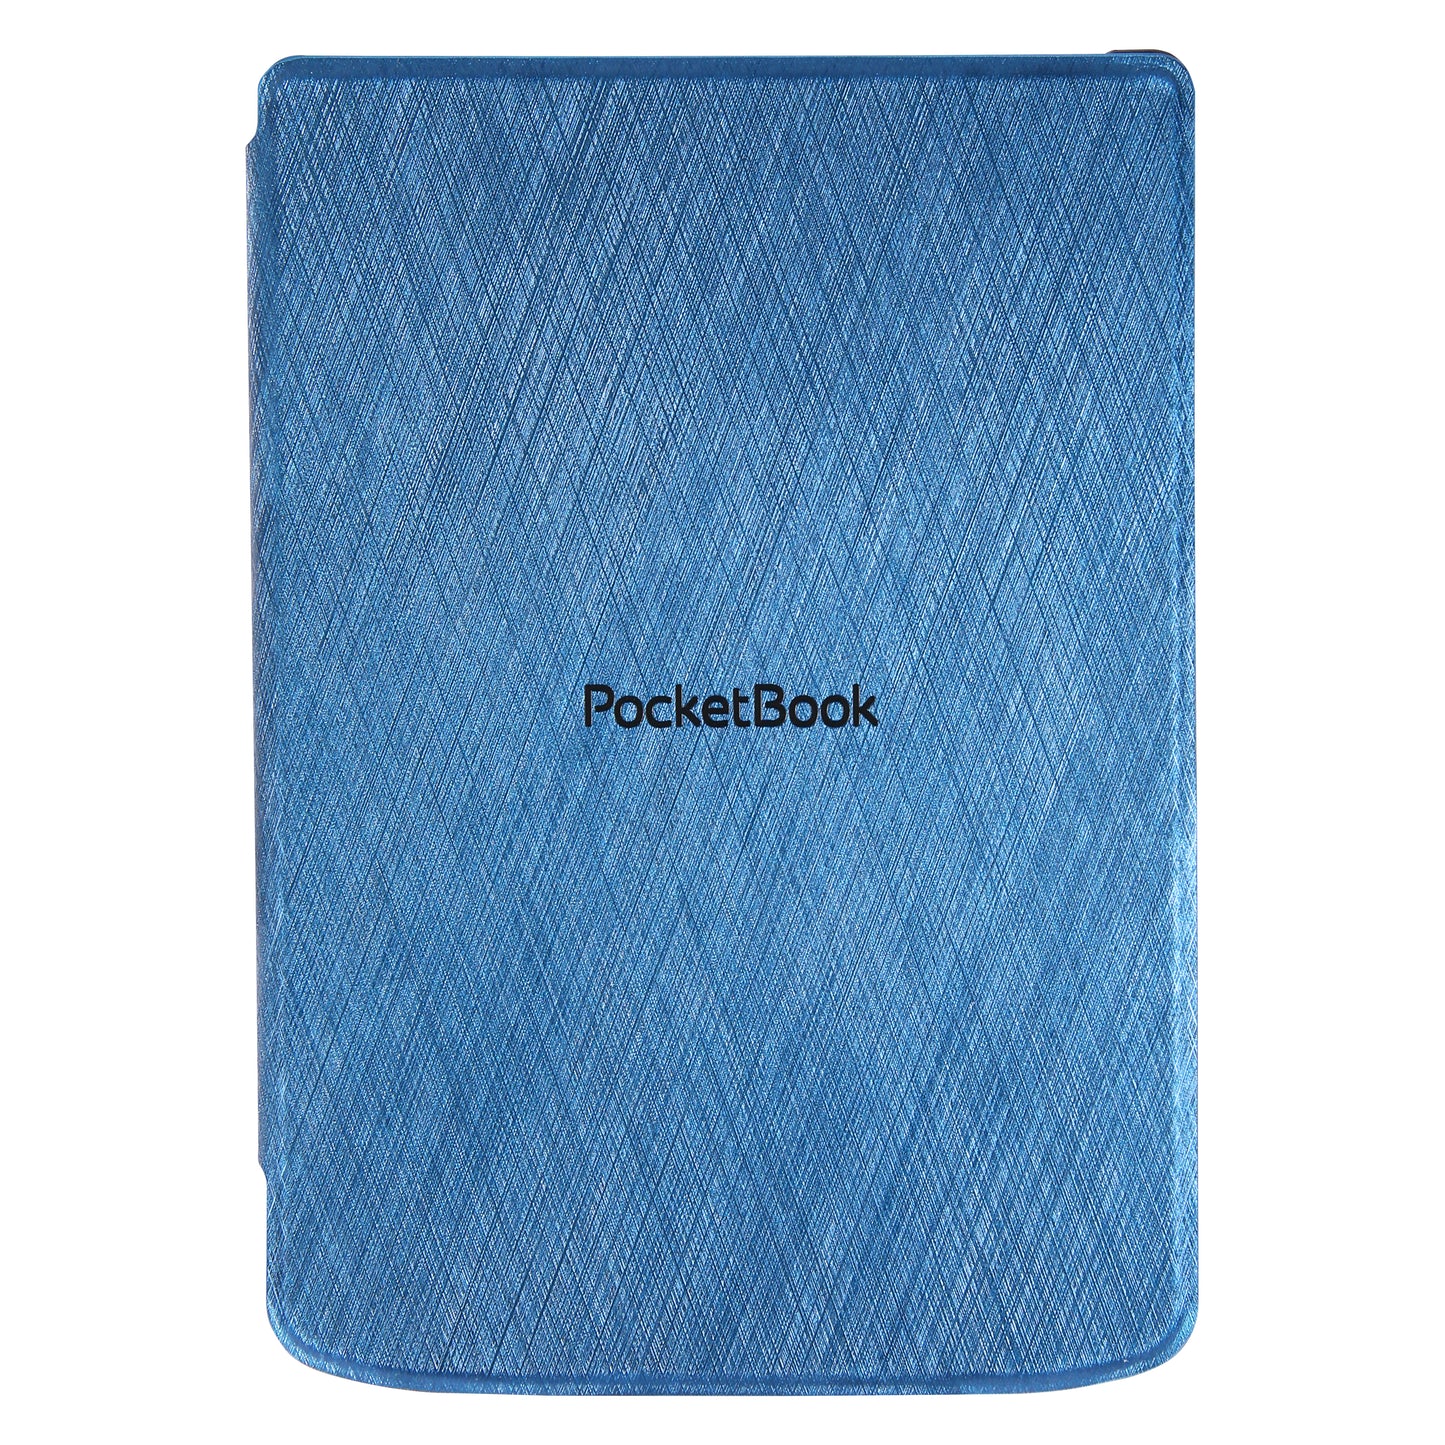 Pocketbook Verse and Verse Pro e-reader Cases